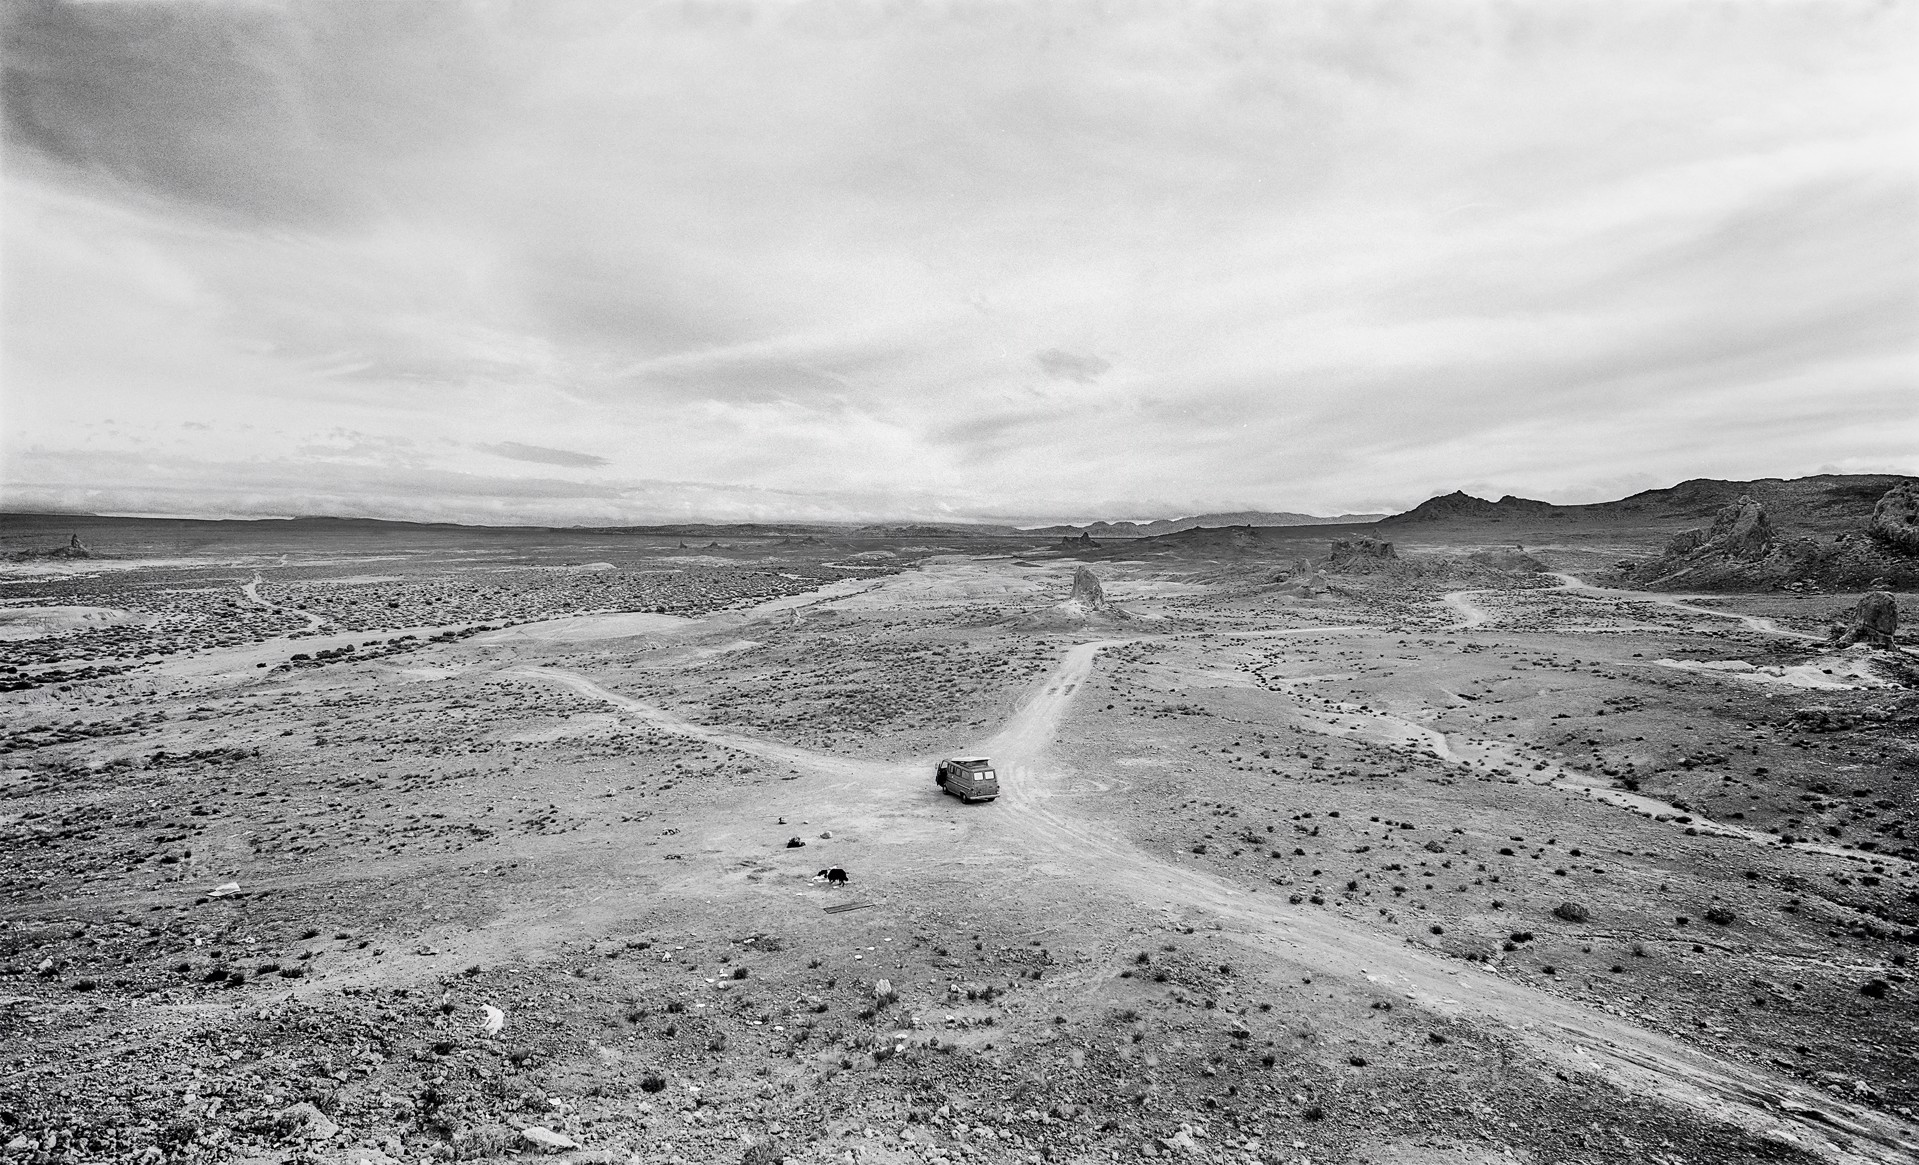 David’s Van, Kodak Checking Out Garbage, Mojave Desert, California, 1982/2012(Searching) by Lawrence McFarland